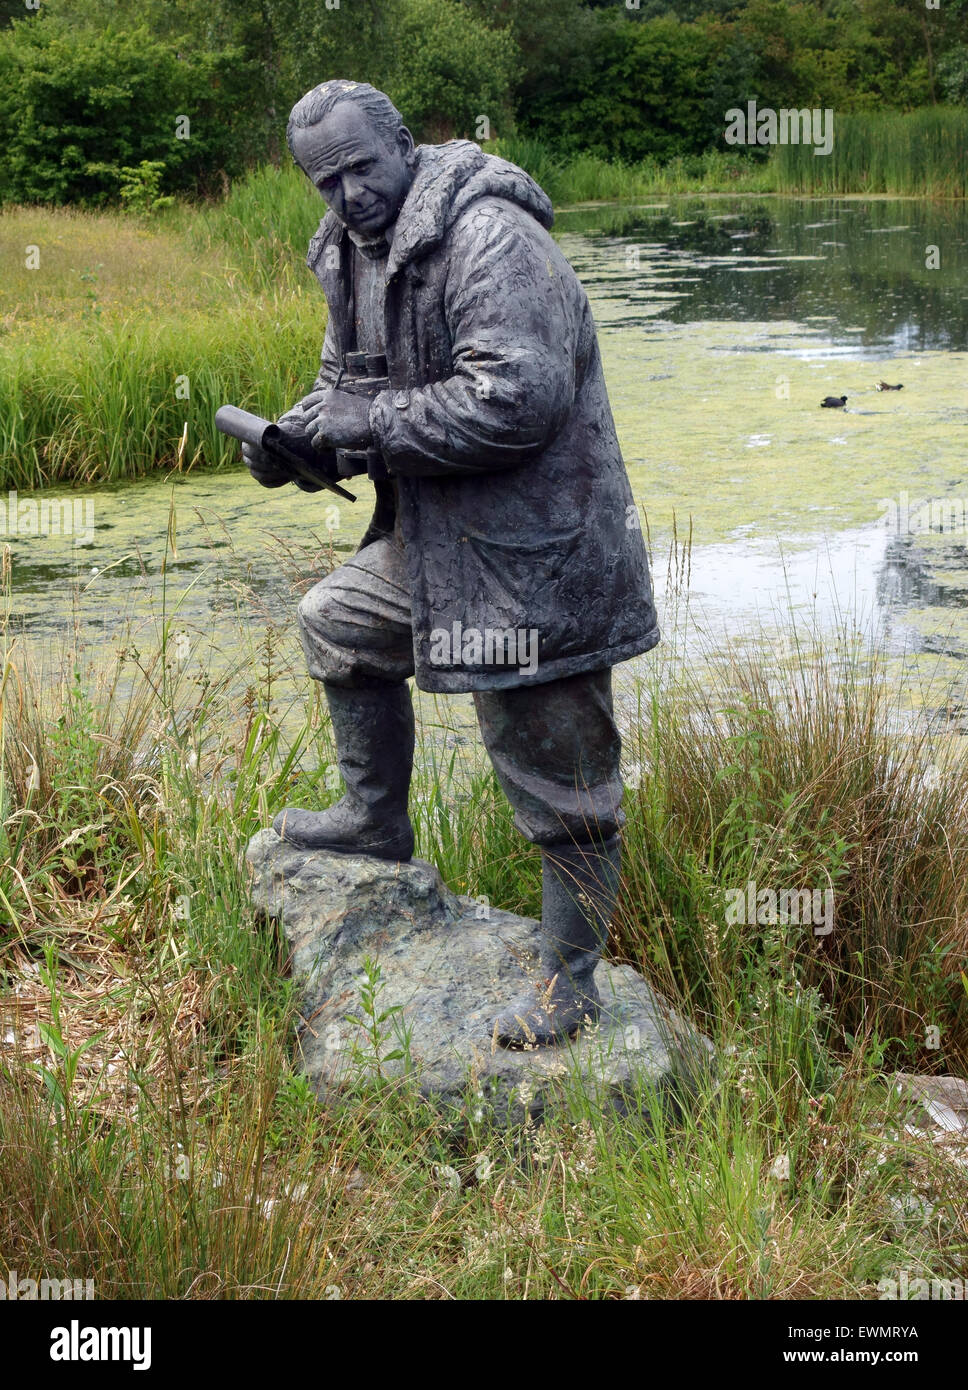 Statua del naturalista Sir Peter Scott a London Wetland Centre, Barnes, Londra Foto Stock